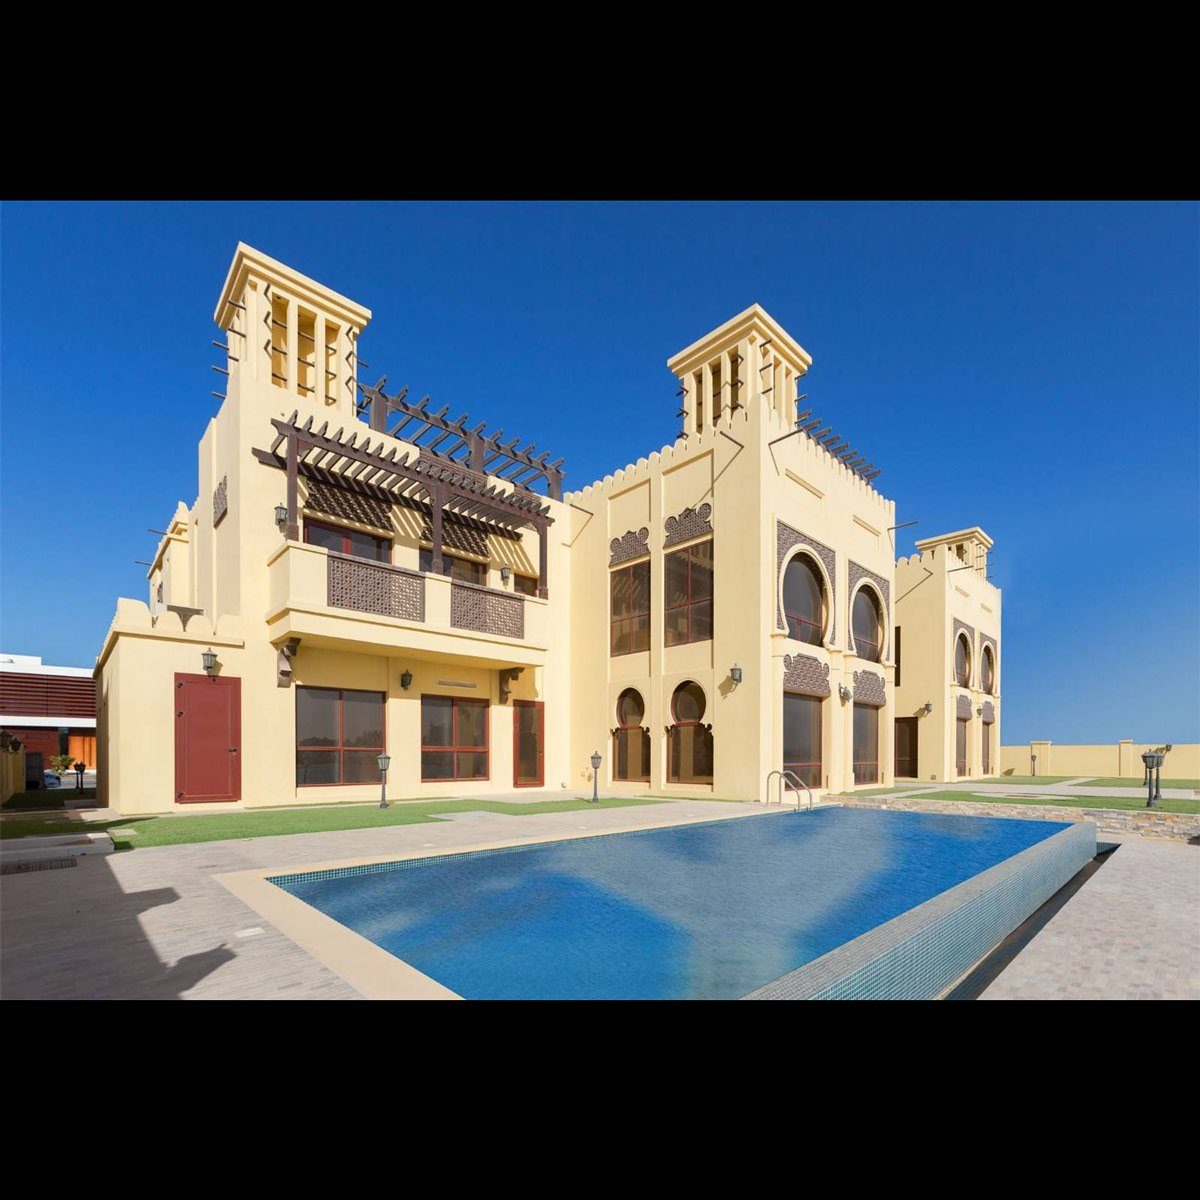 Dubai mansion with a pool